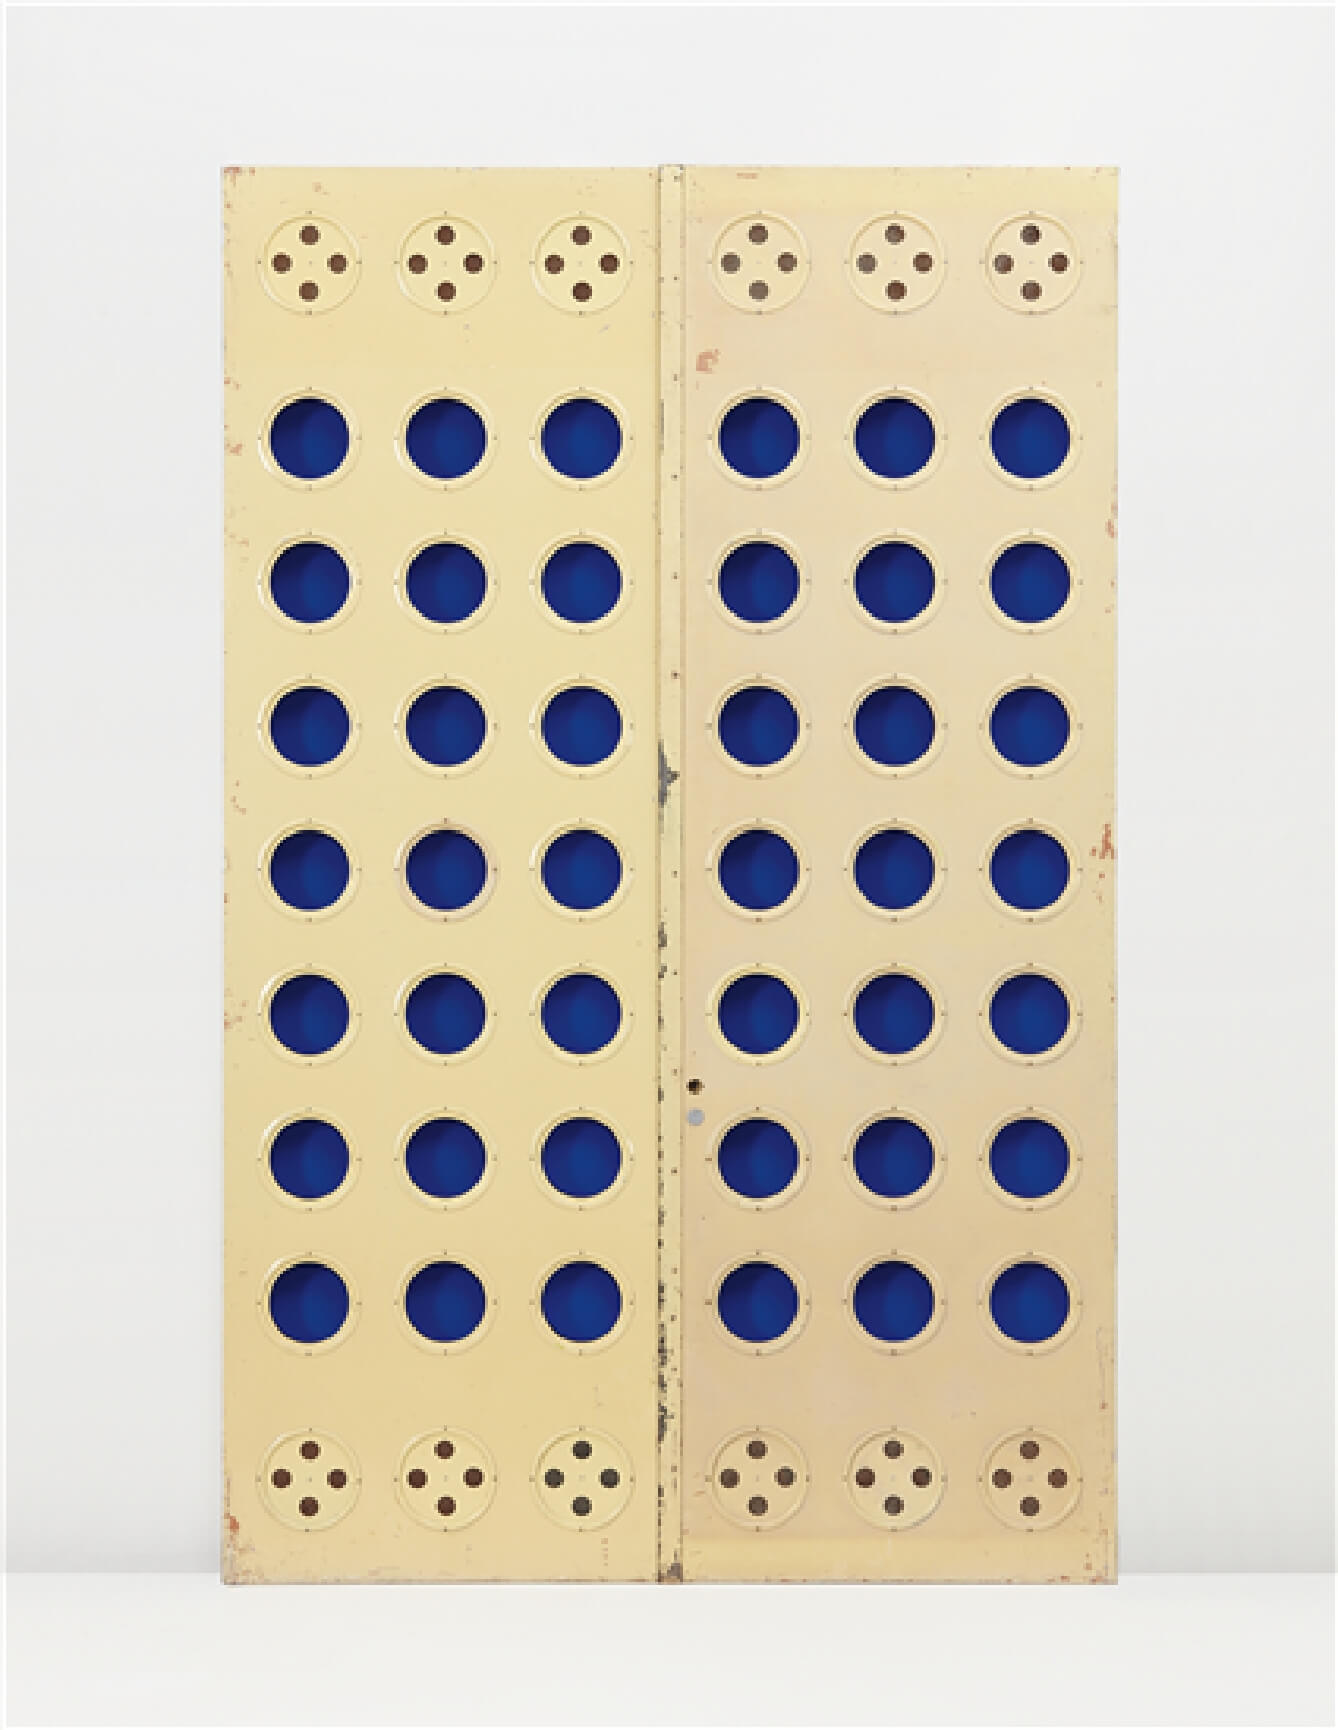 Phillips Pair of doors designed for the Maisons Tropicales – Jean Prouvé (Design New York Monday, June 10, 2013)